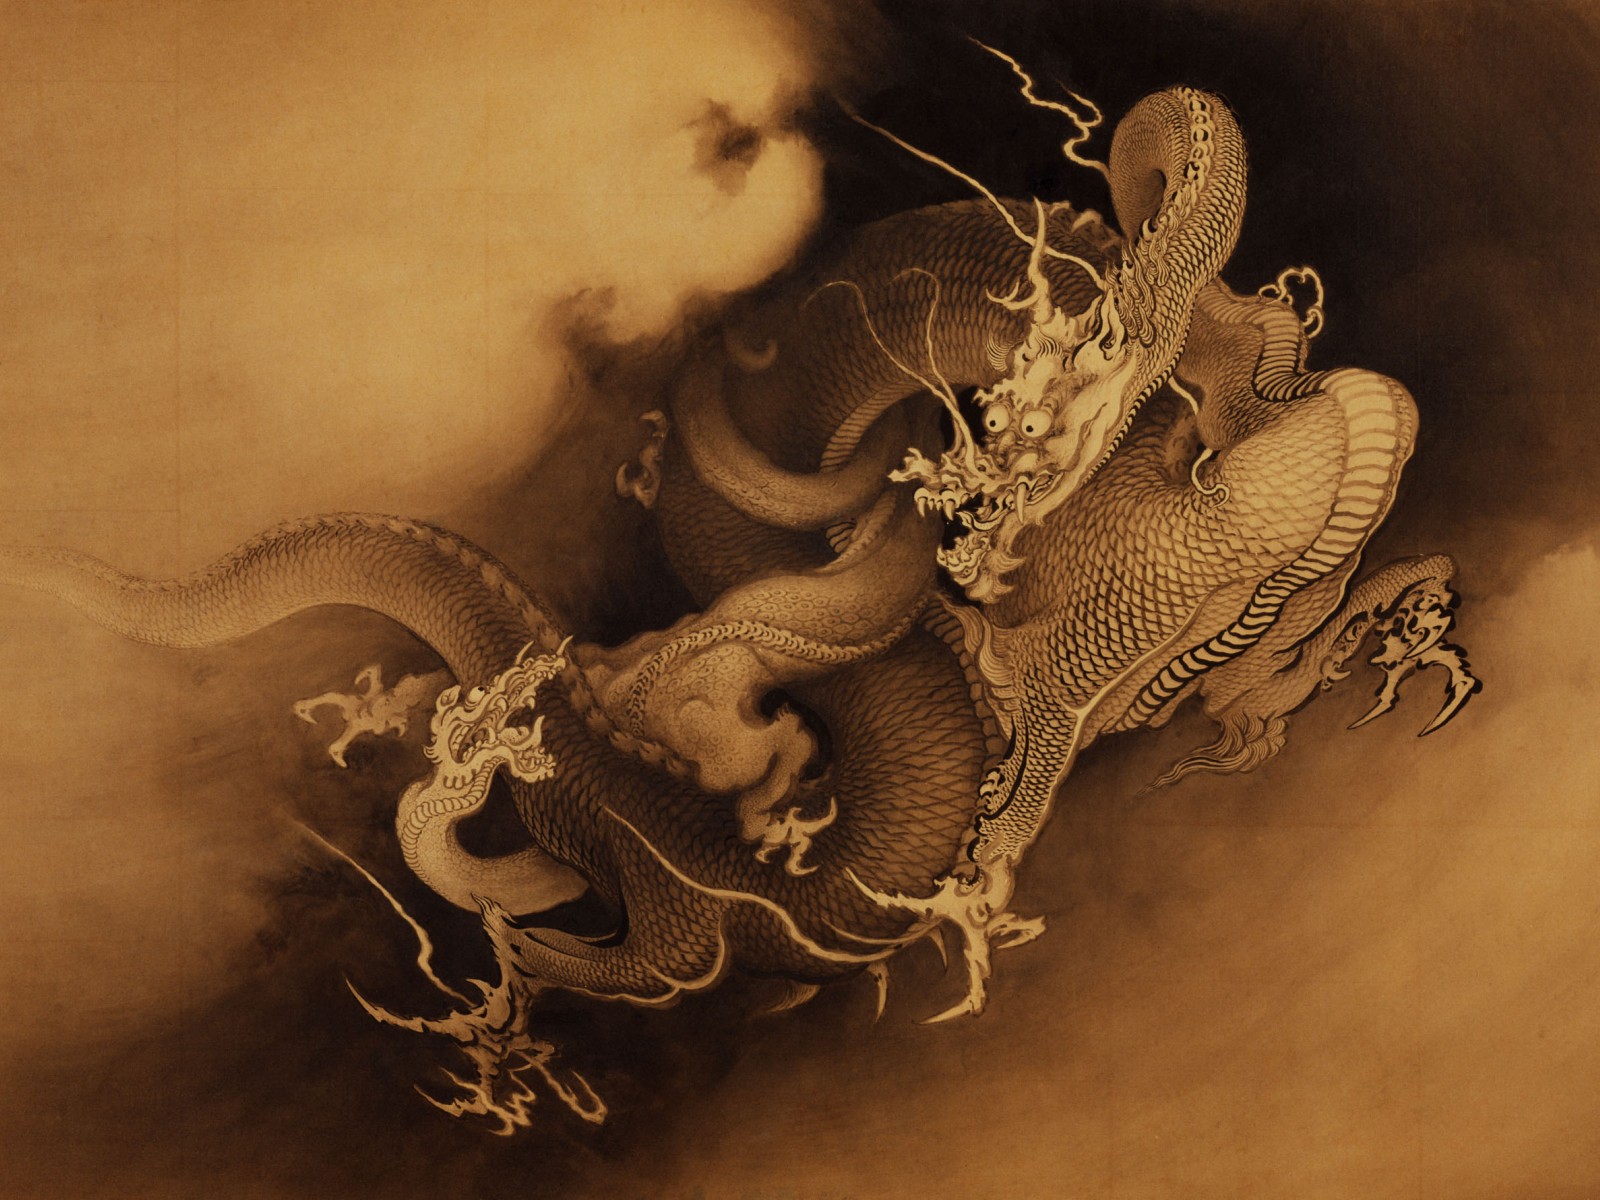 Previous, Drawn wallpapers - Chinese Dragon wallpaper